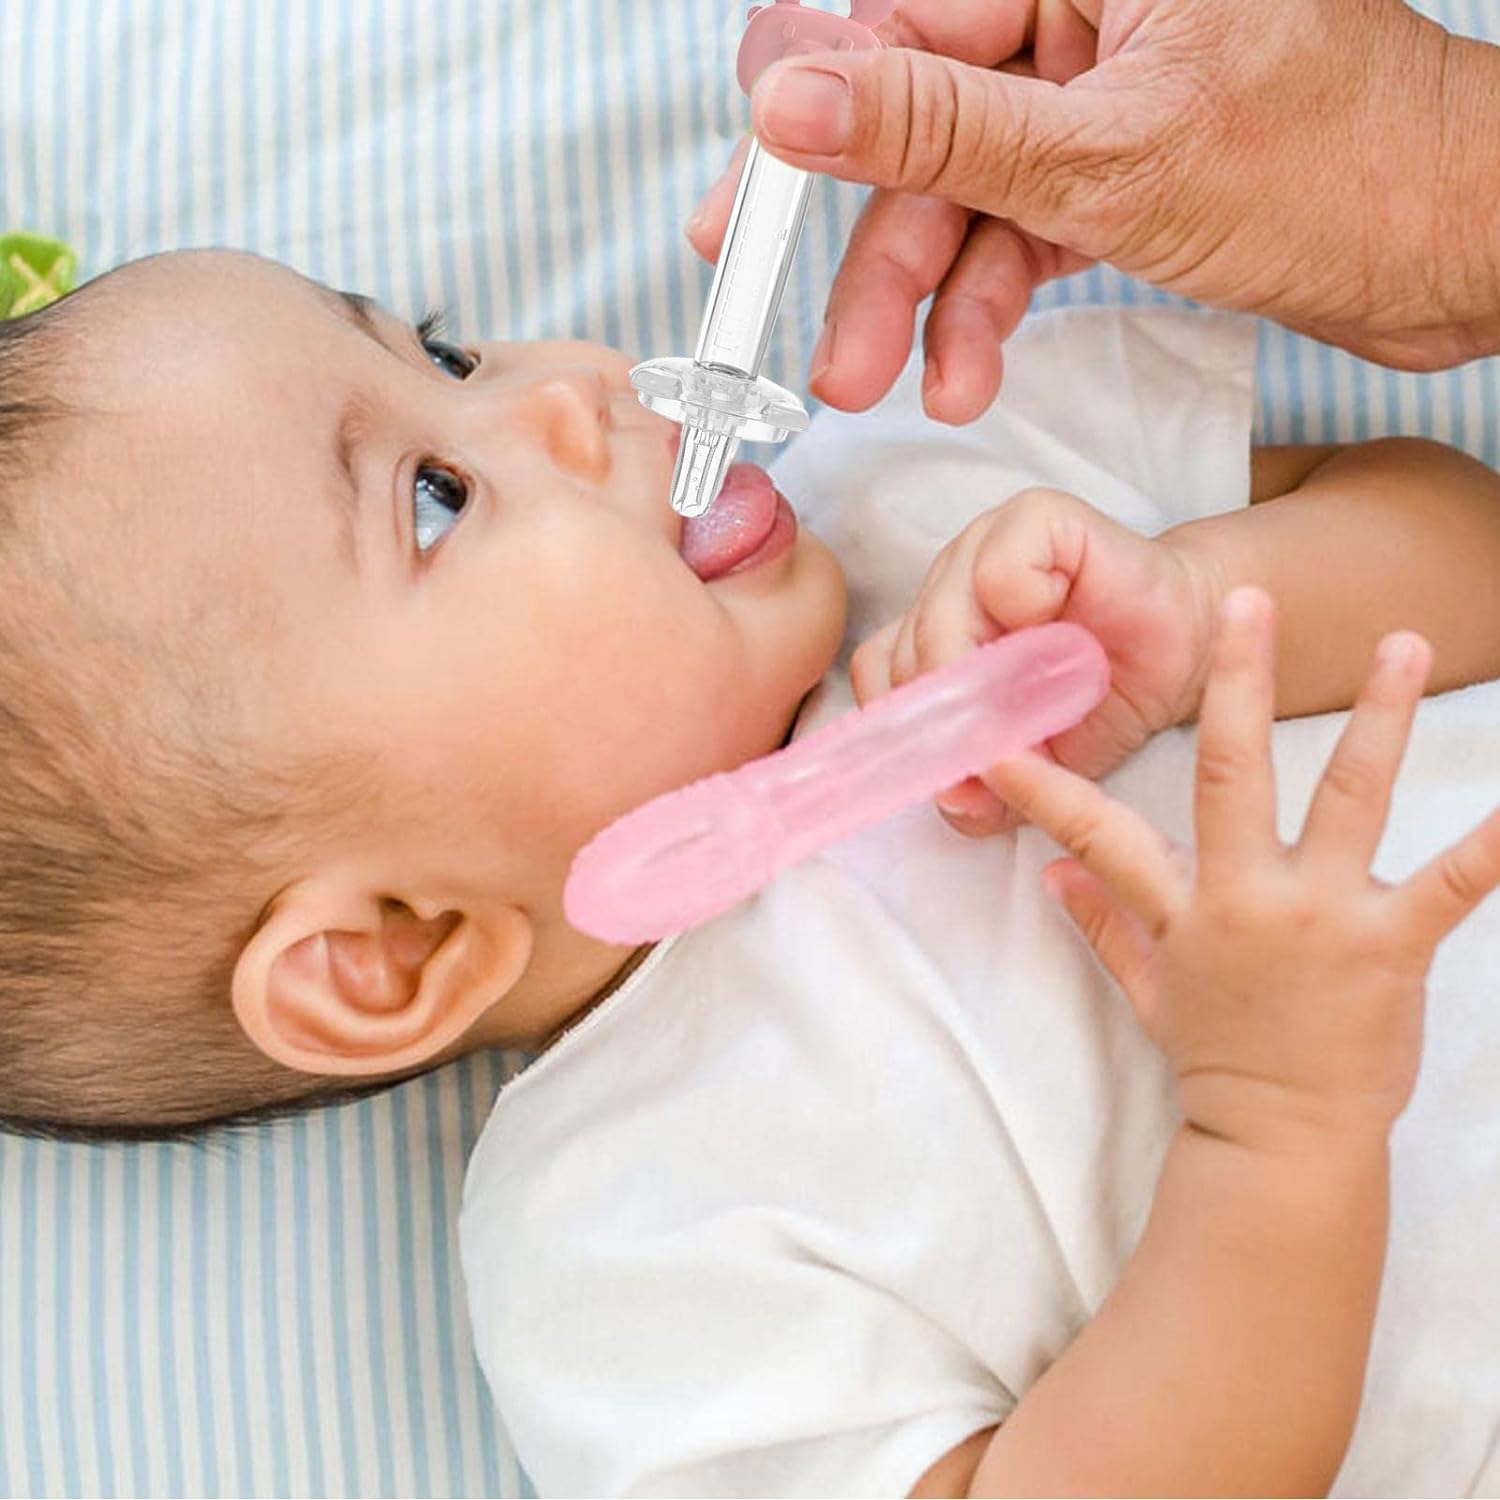 Silicone Baby Medicine Feeder Dropper - Home Essentials Store